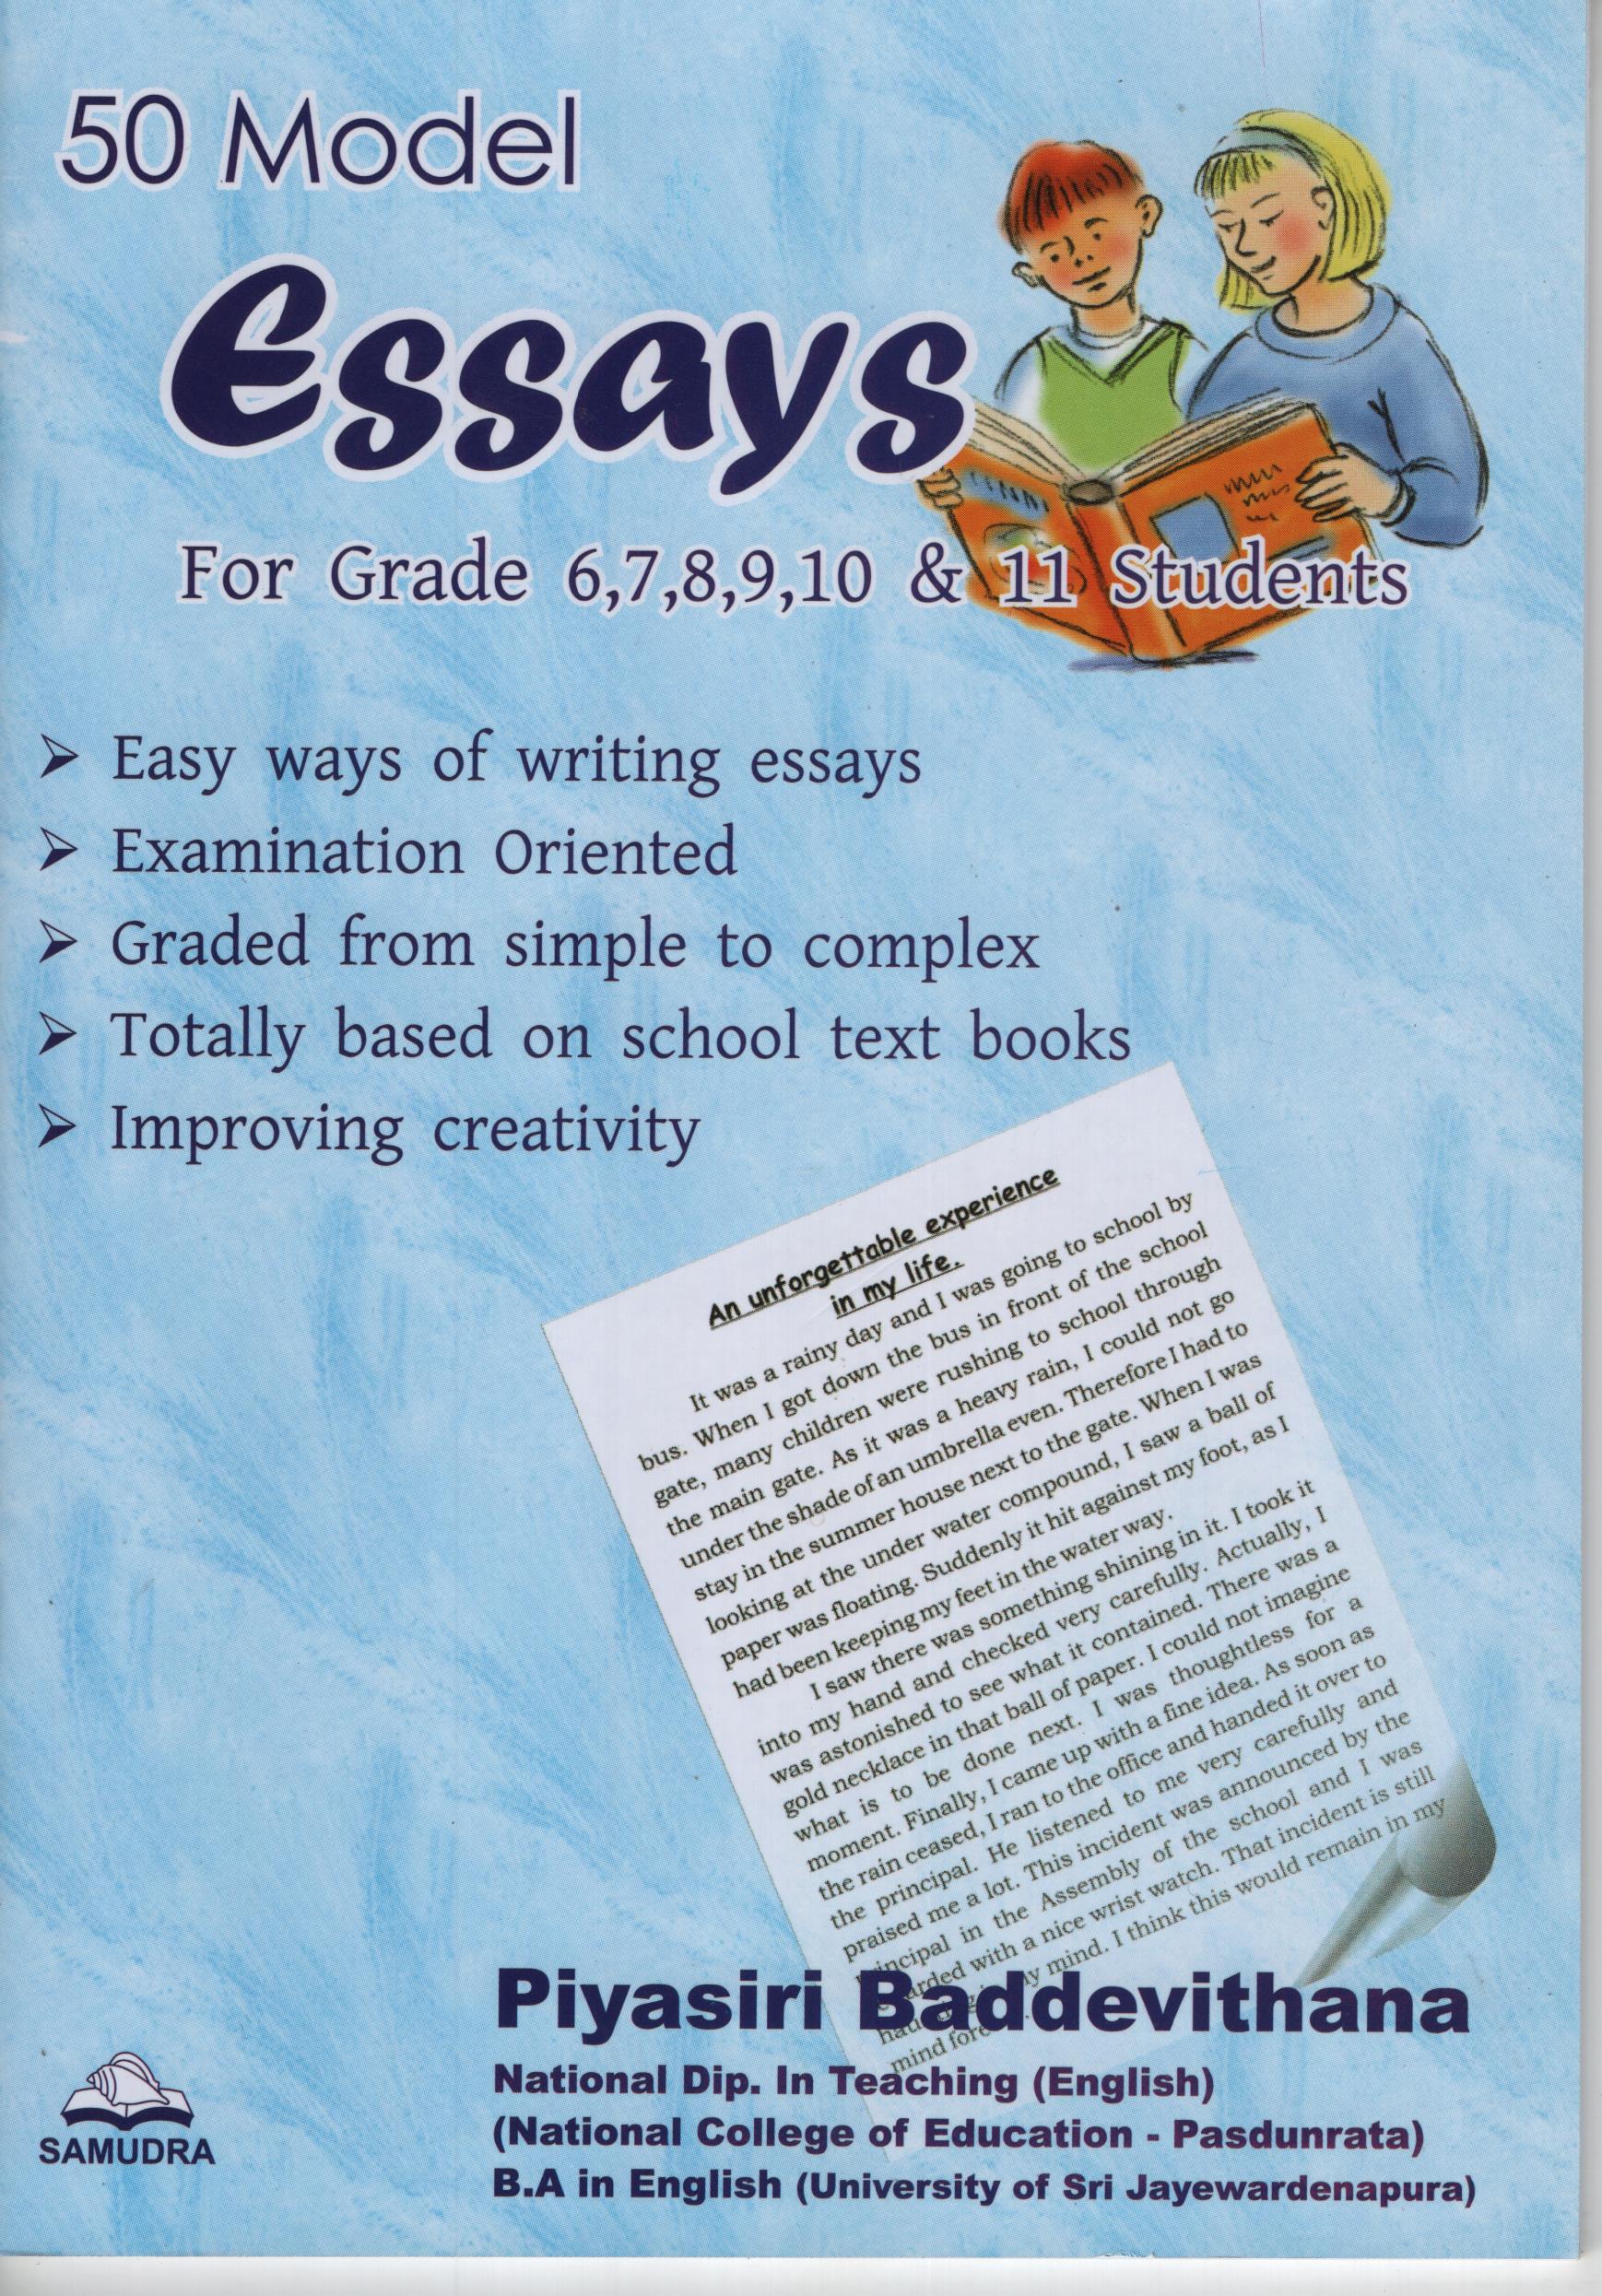 50 Model Essays For Grade 6 7 8 9 10 & 11 Students